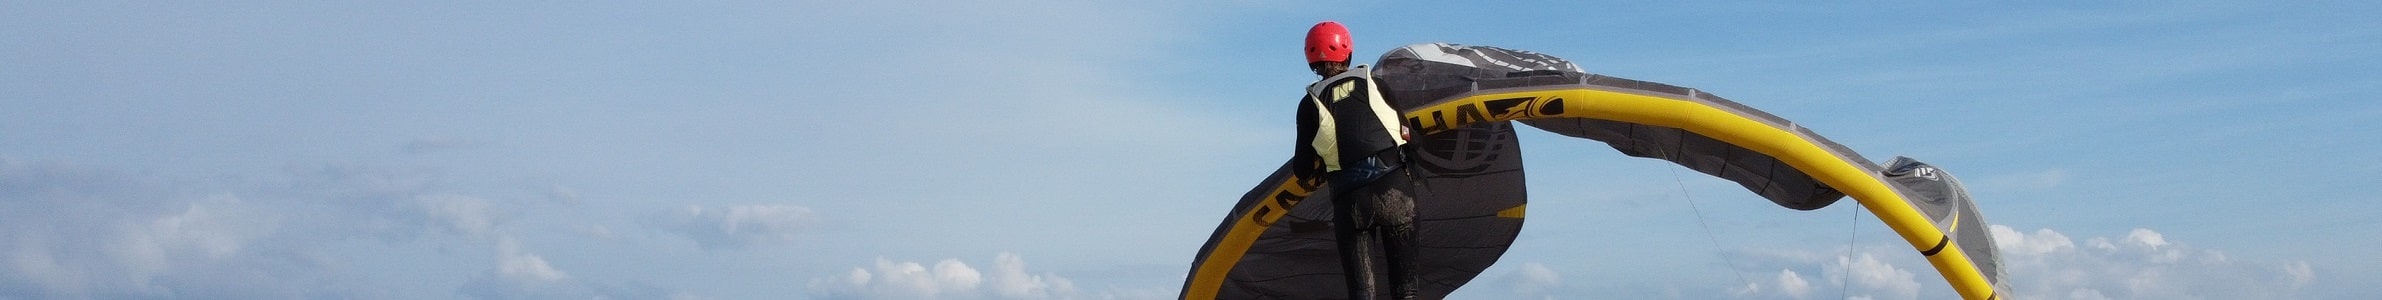 Kitesurfles.nl  Leer voordelig kitesurfen in Kijkduin Kitesurfles Scheveningen - Kitesurfen cursus